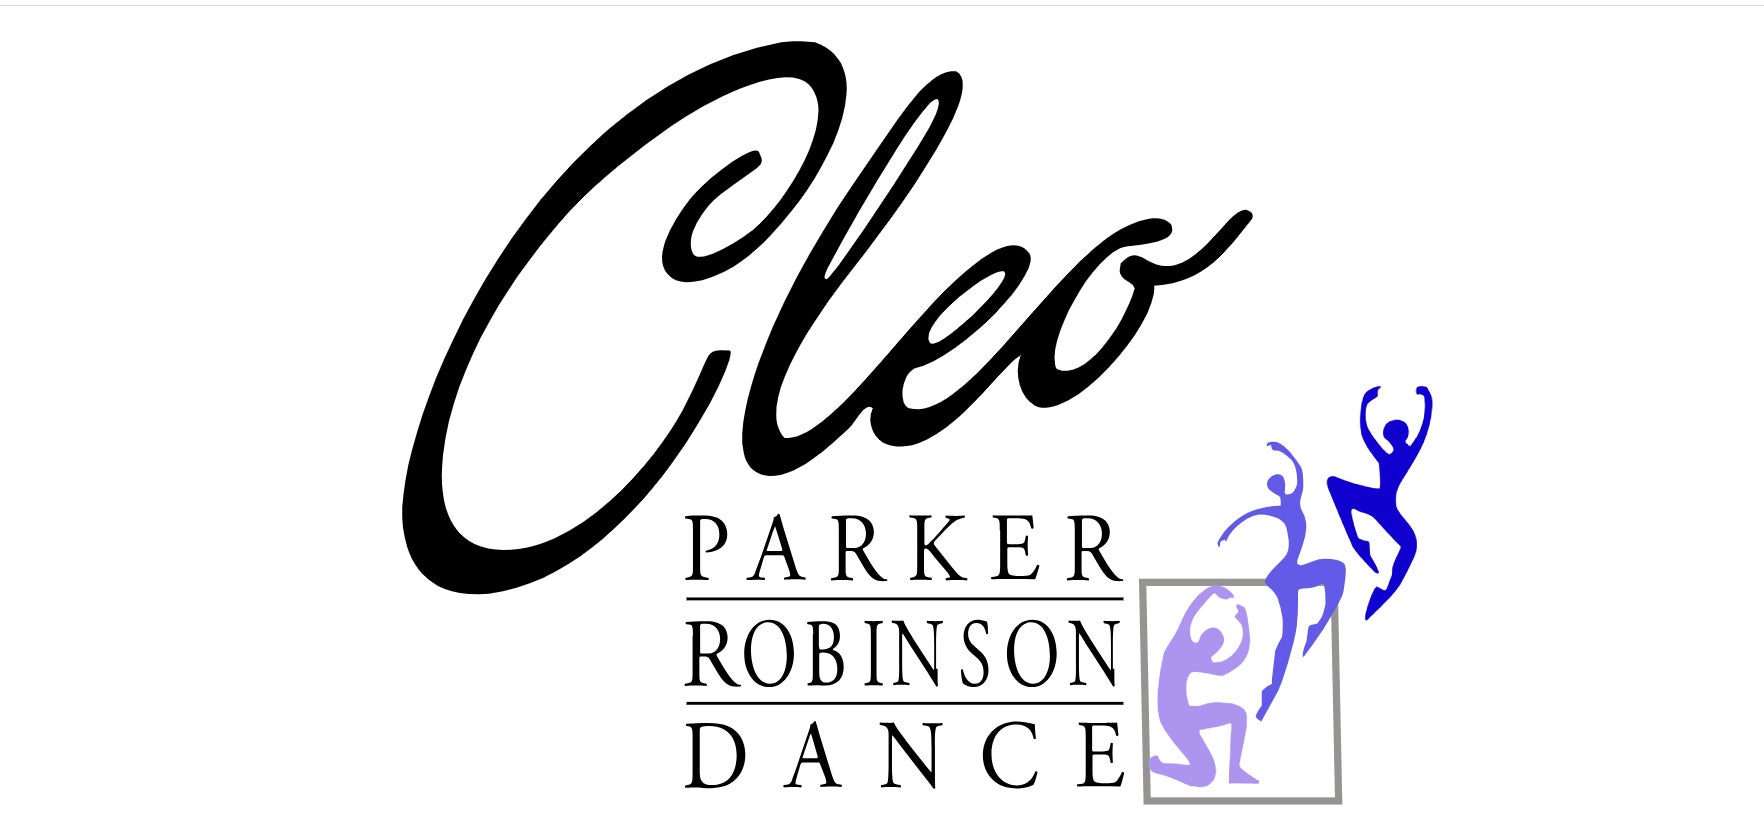 Cleo-Parker-Robinson-Dance-3-Dancers-clr-Logo.jpg